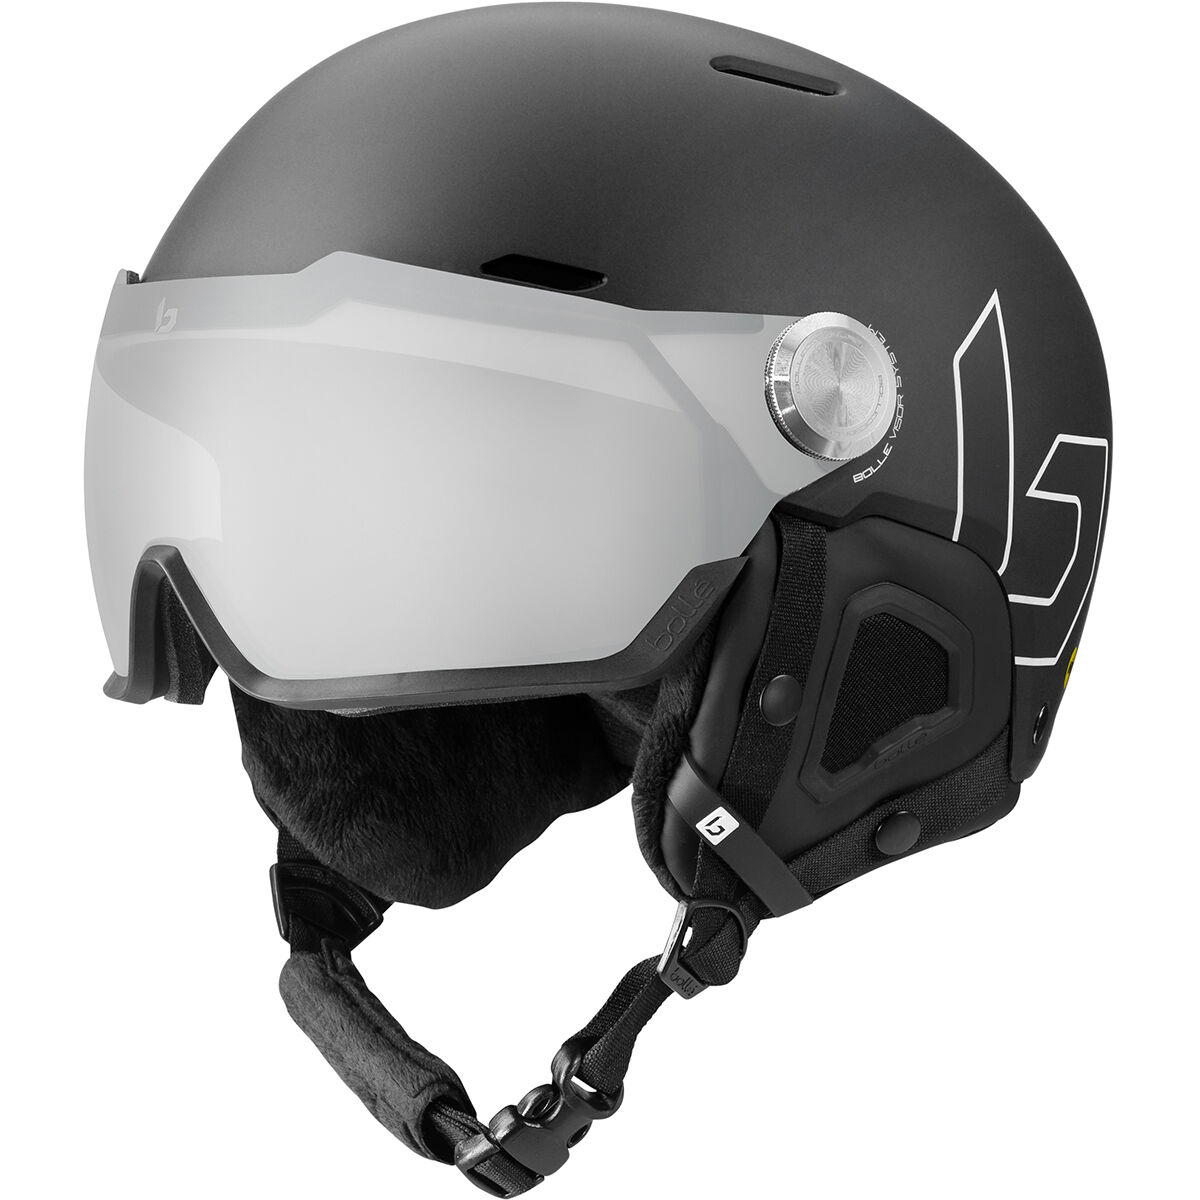 NEW with blemishes Silver Winter Sport Ski Helmet Large 58cm-61cm 